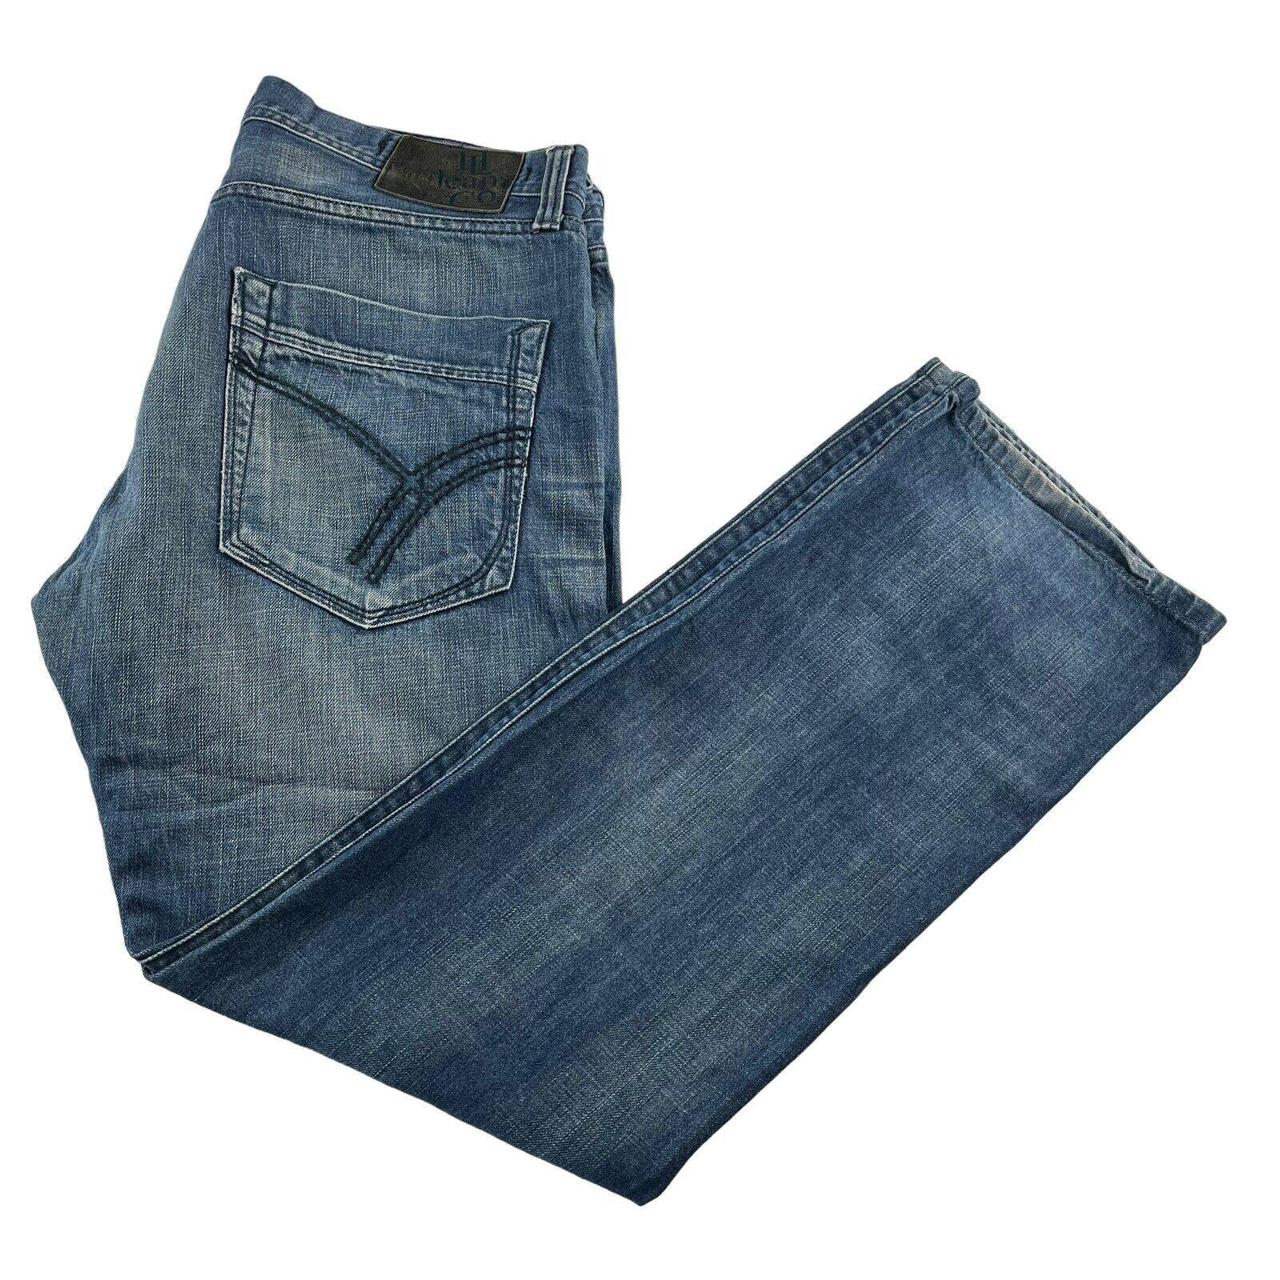 Henri Lloyd Blue Fade Denim Jeans Straight Leg W32... - Depop